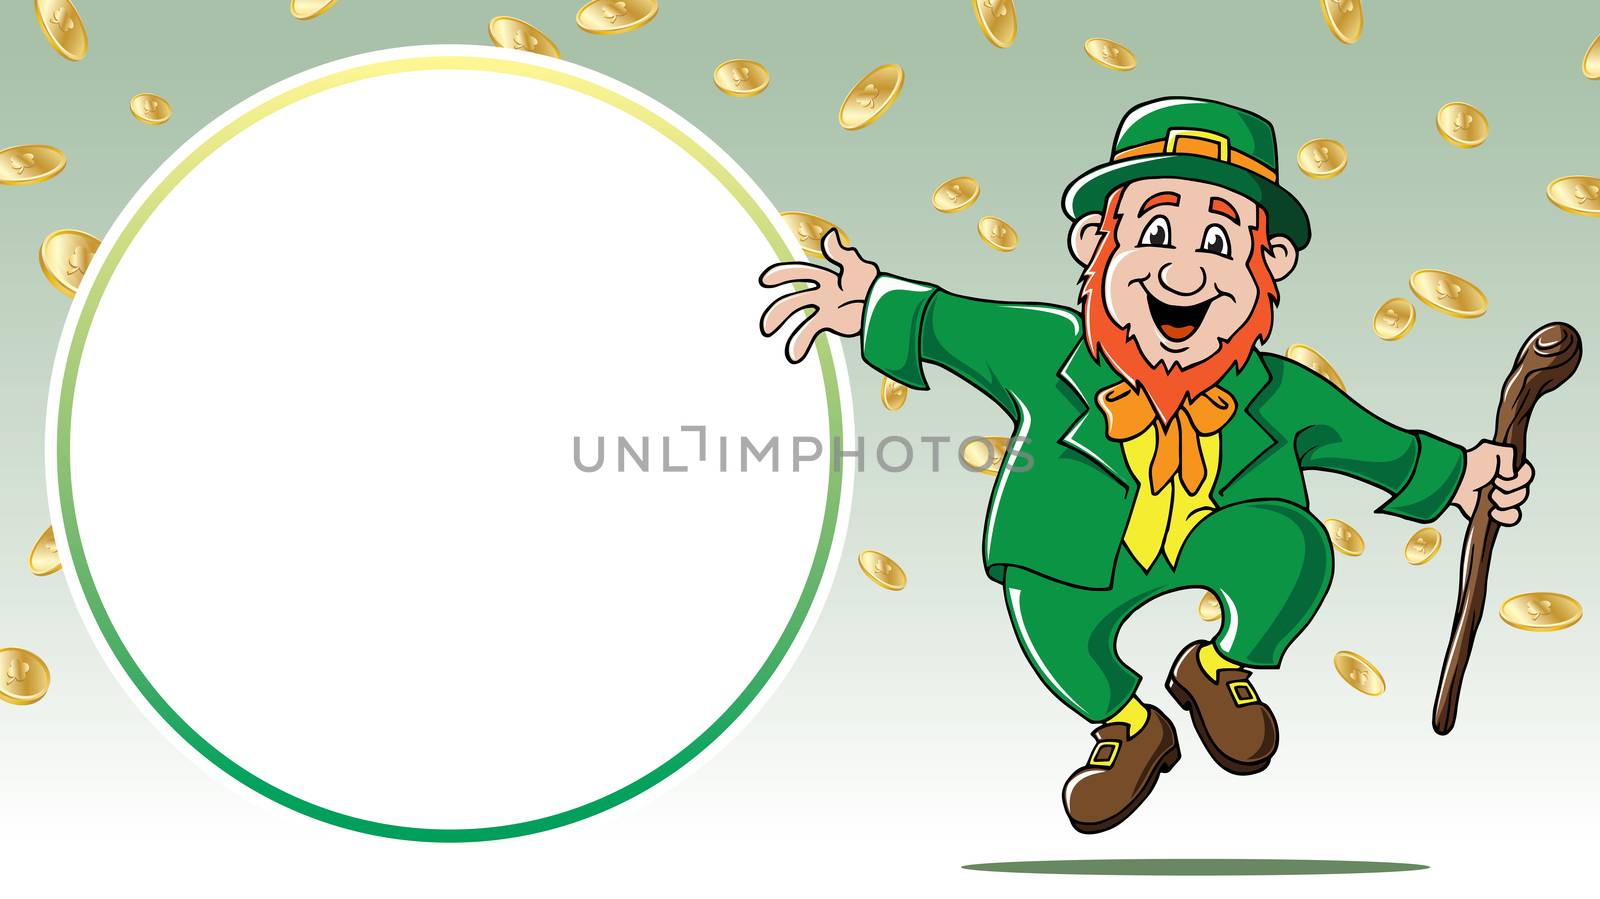 Saint Patrick's Day leprechaun dancing among gold coins retail sale